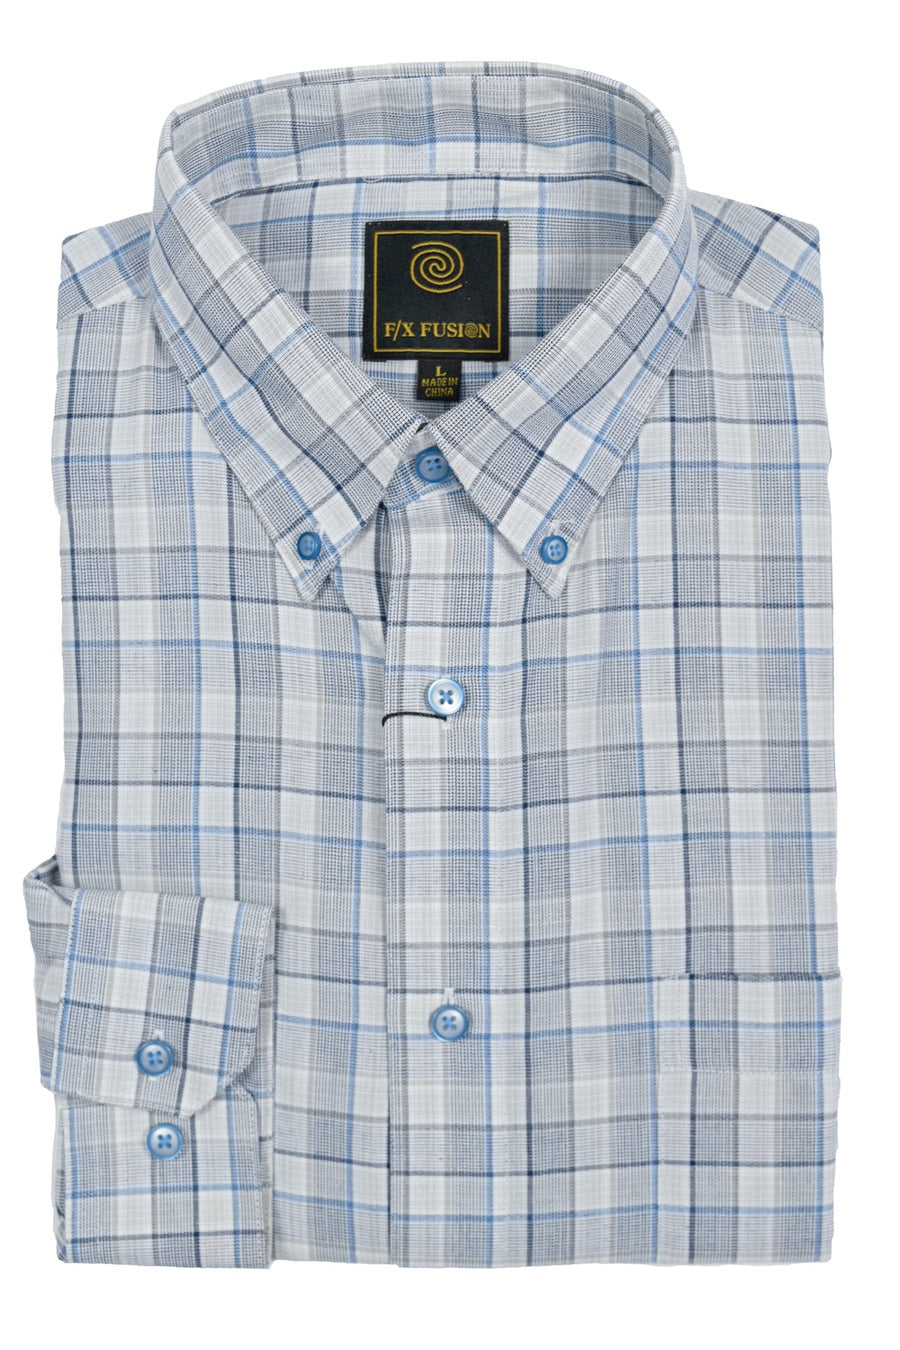 FX Fusion Grey/Blue Textured Check Short Sleeve Sport Shirt